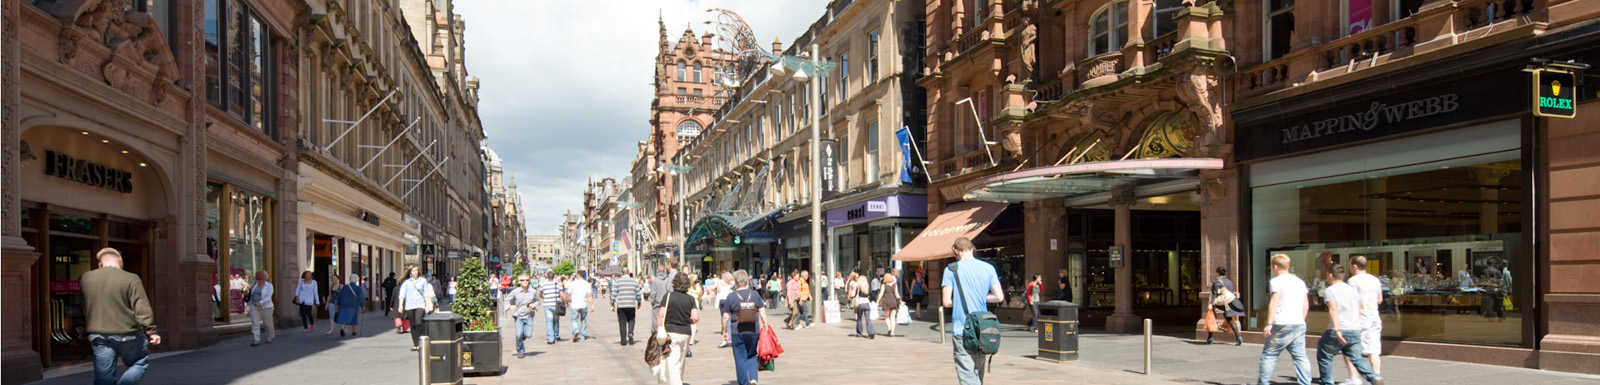 Buchanan Street is one of Glasgow's main shopping streets